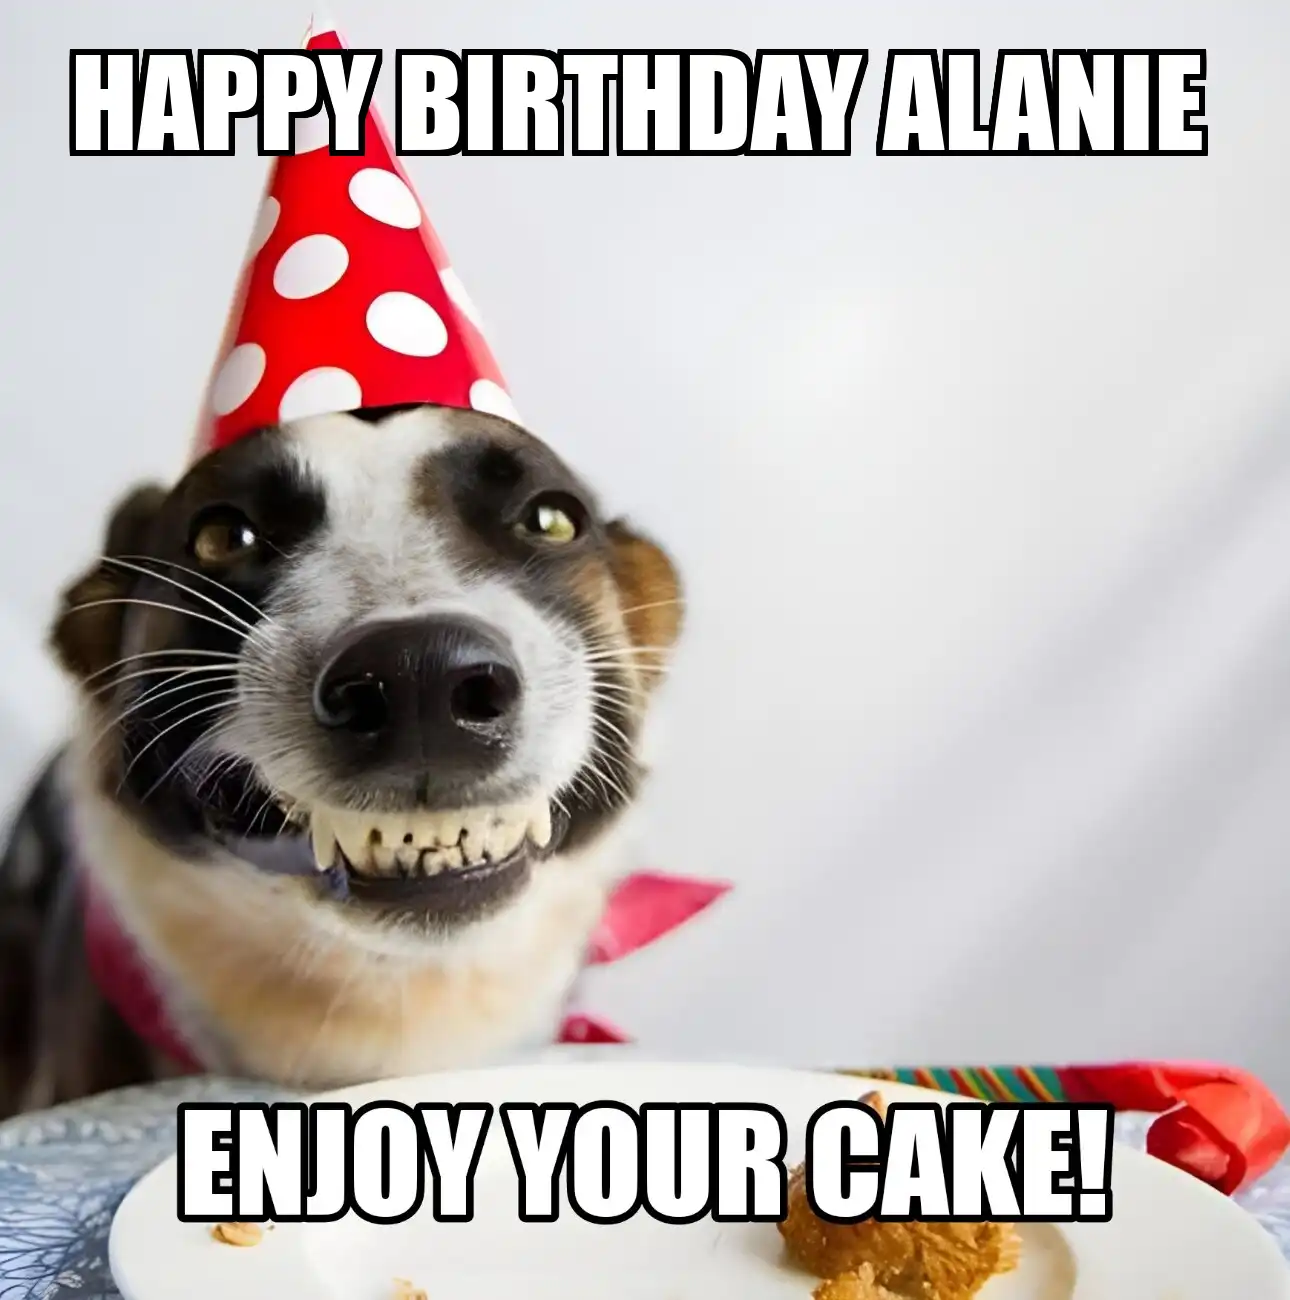 Happy Birthday Alanie Enjoy Your Cake Dog Meme